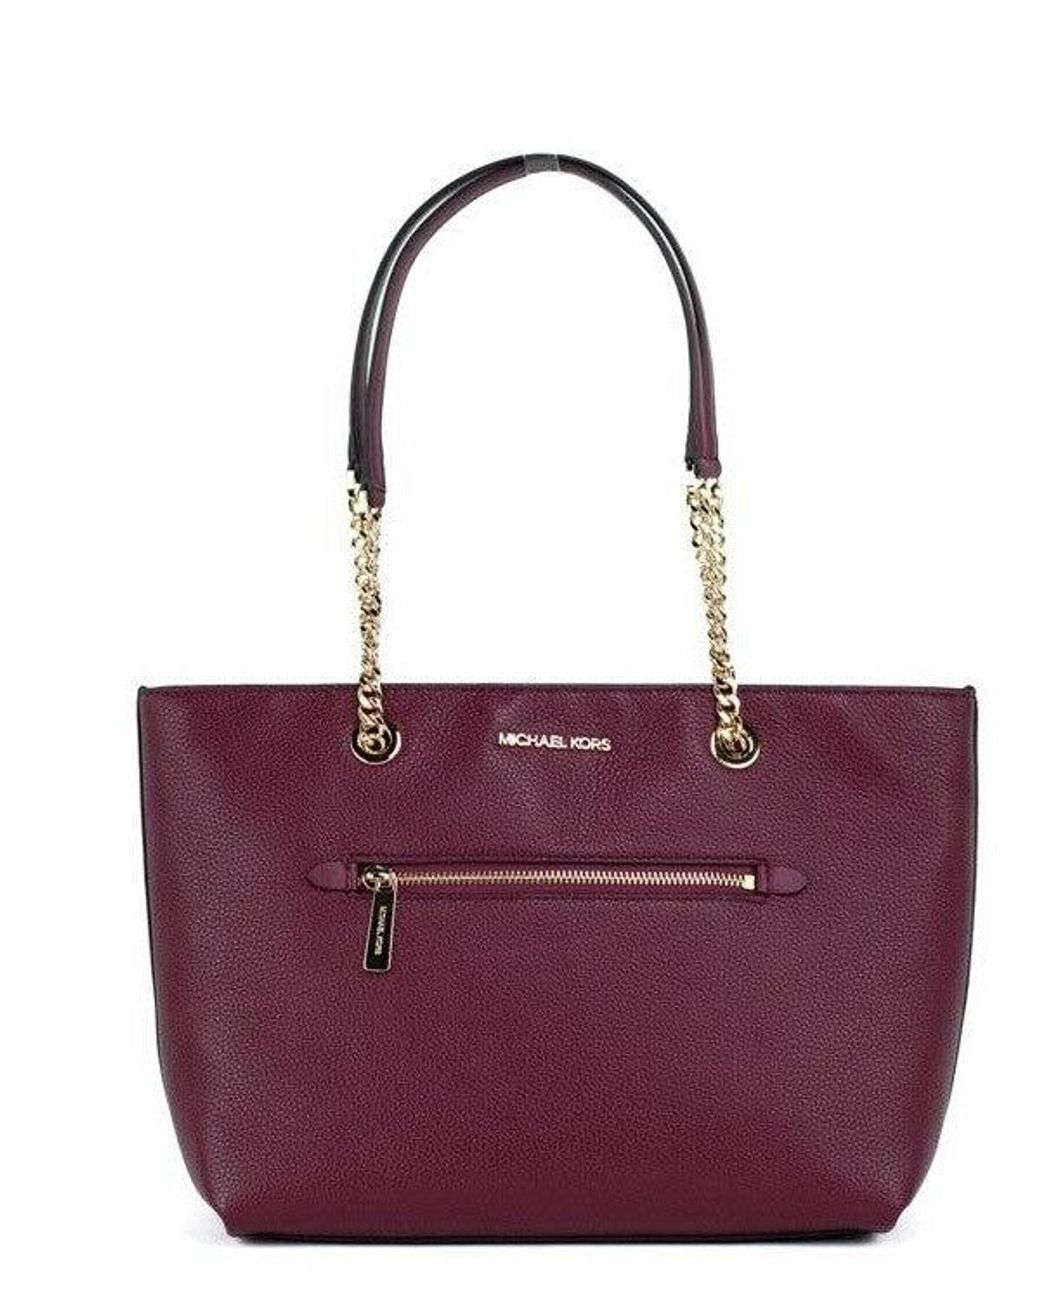 Michael Kors Jet Set Medium Mulberry Leather Front Zip Chain Tote Bag  Handbag in Purple